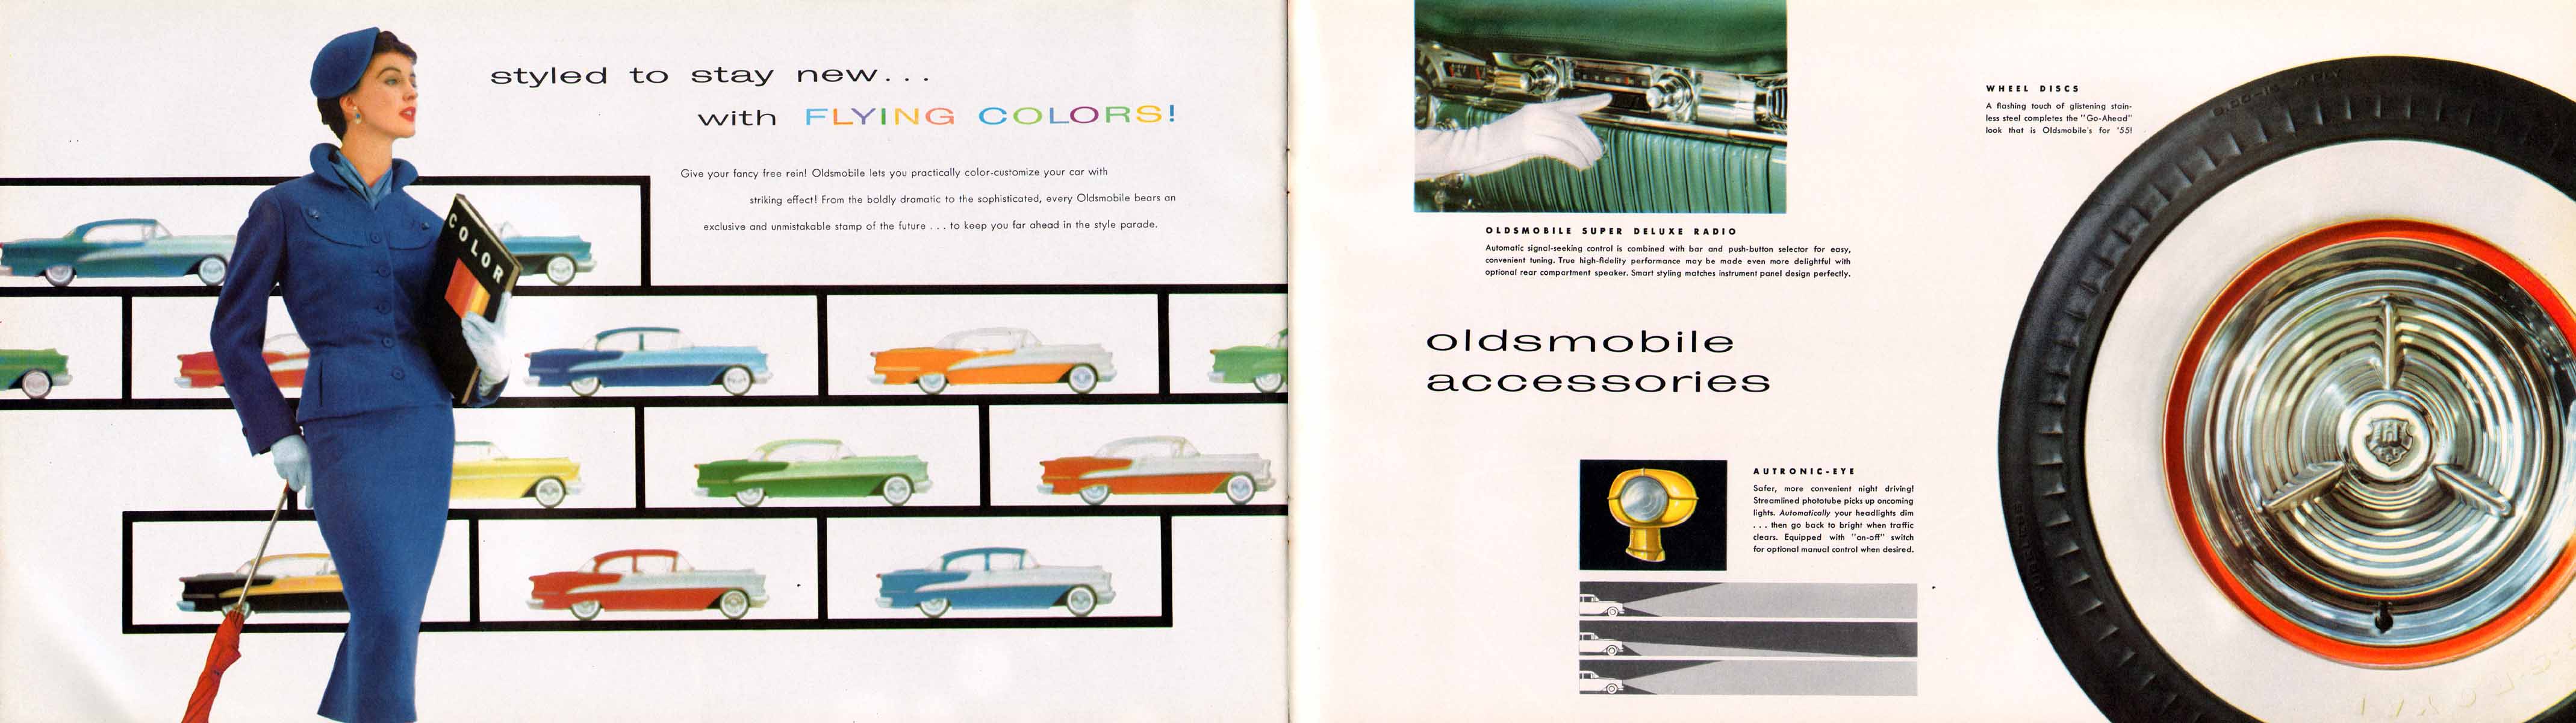 1955 Oldsmobile Motor Cars Brochure Page 1